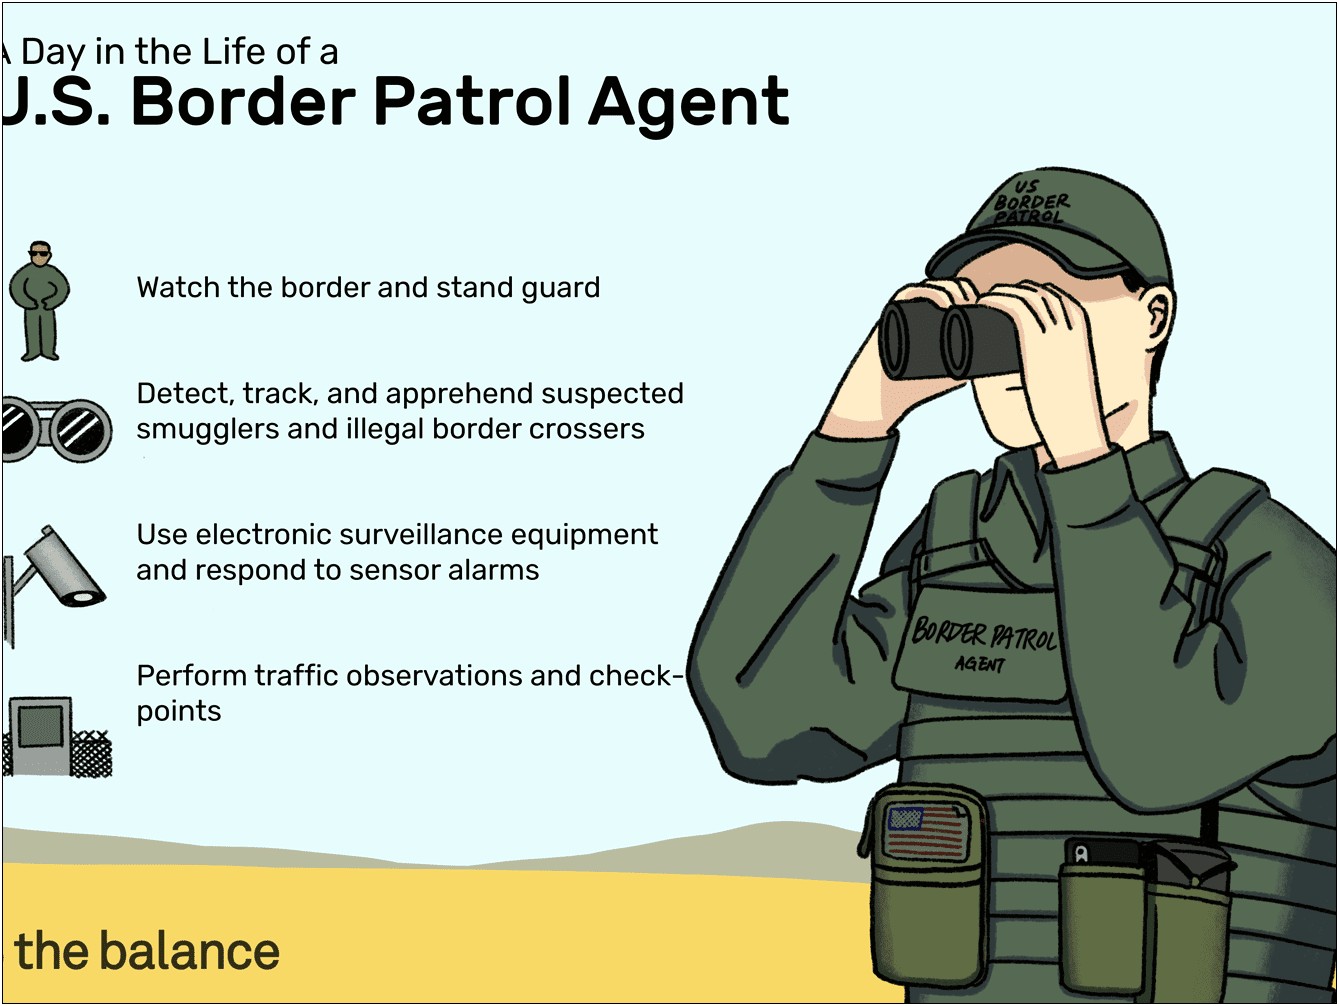 Resume Objective For Border Patrol Agent